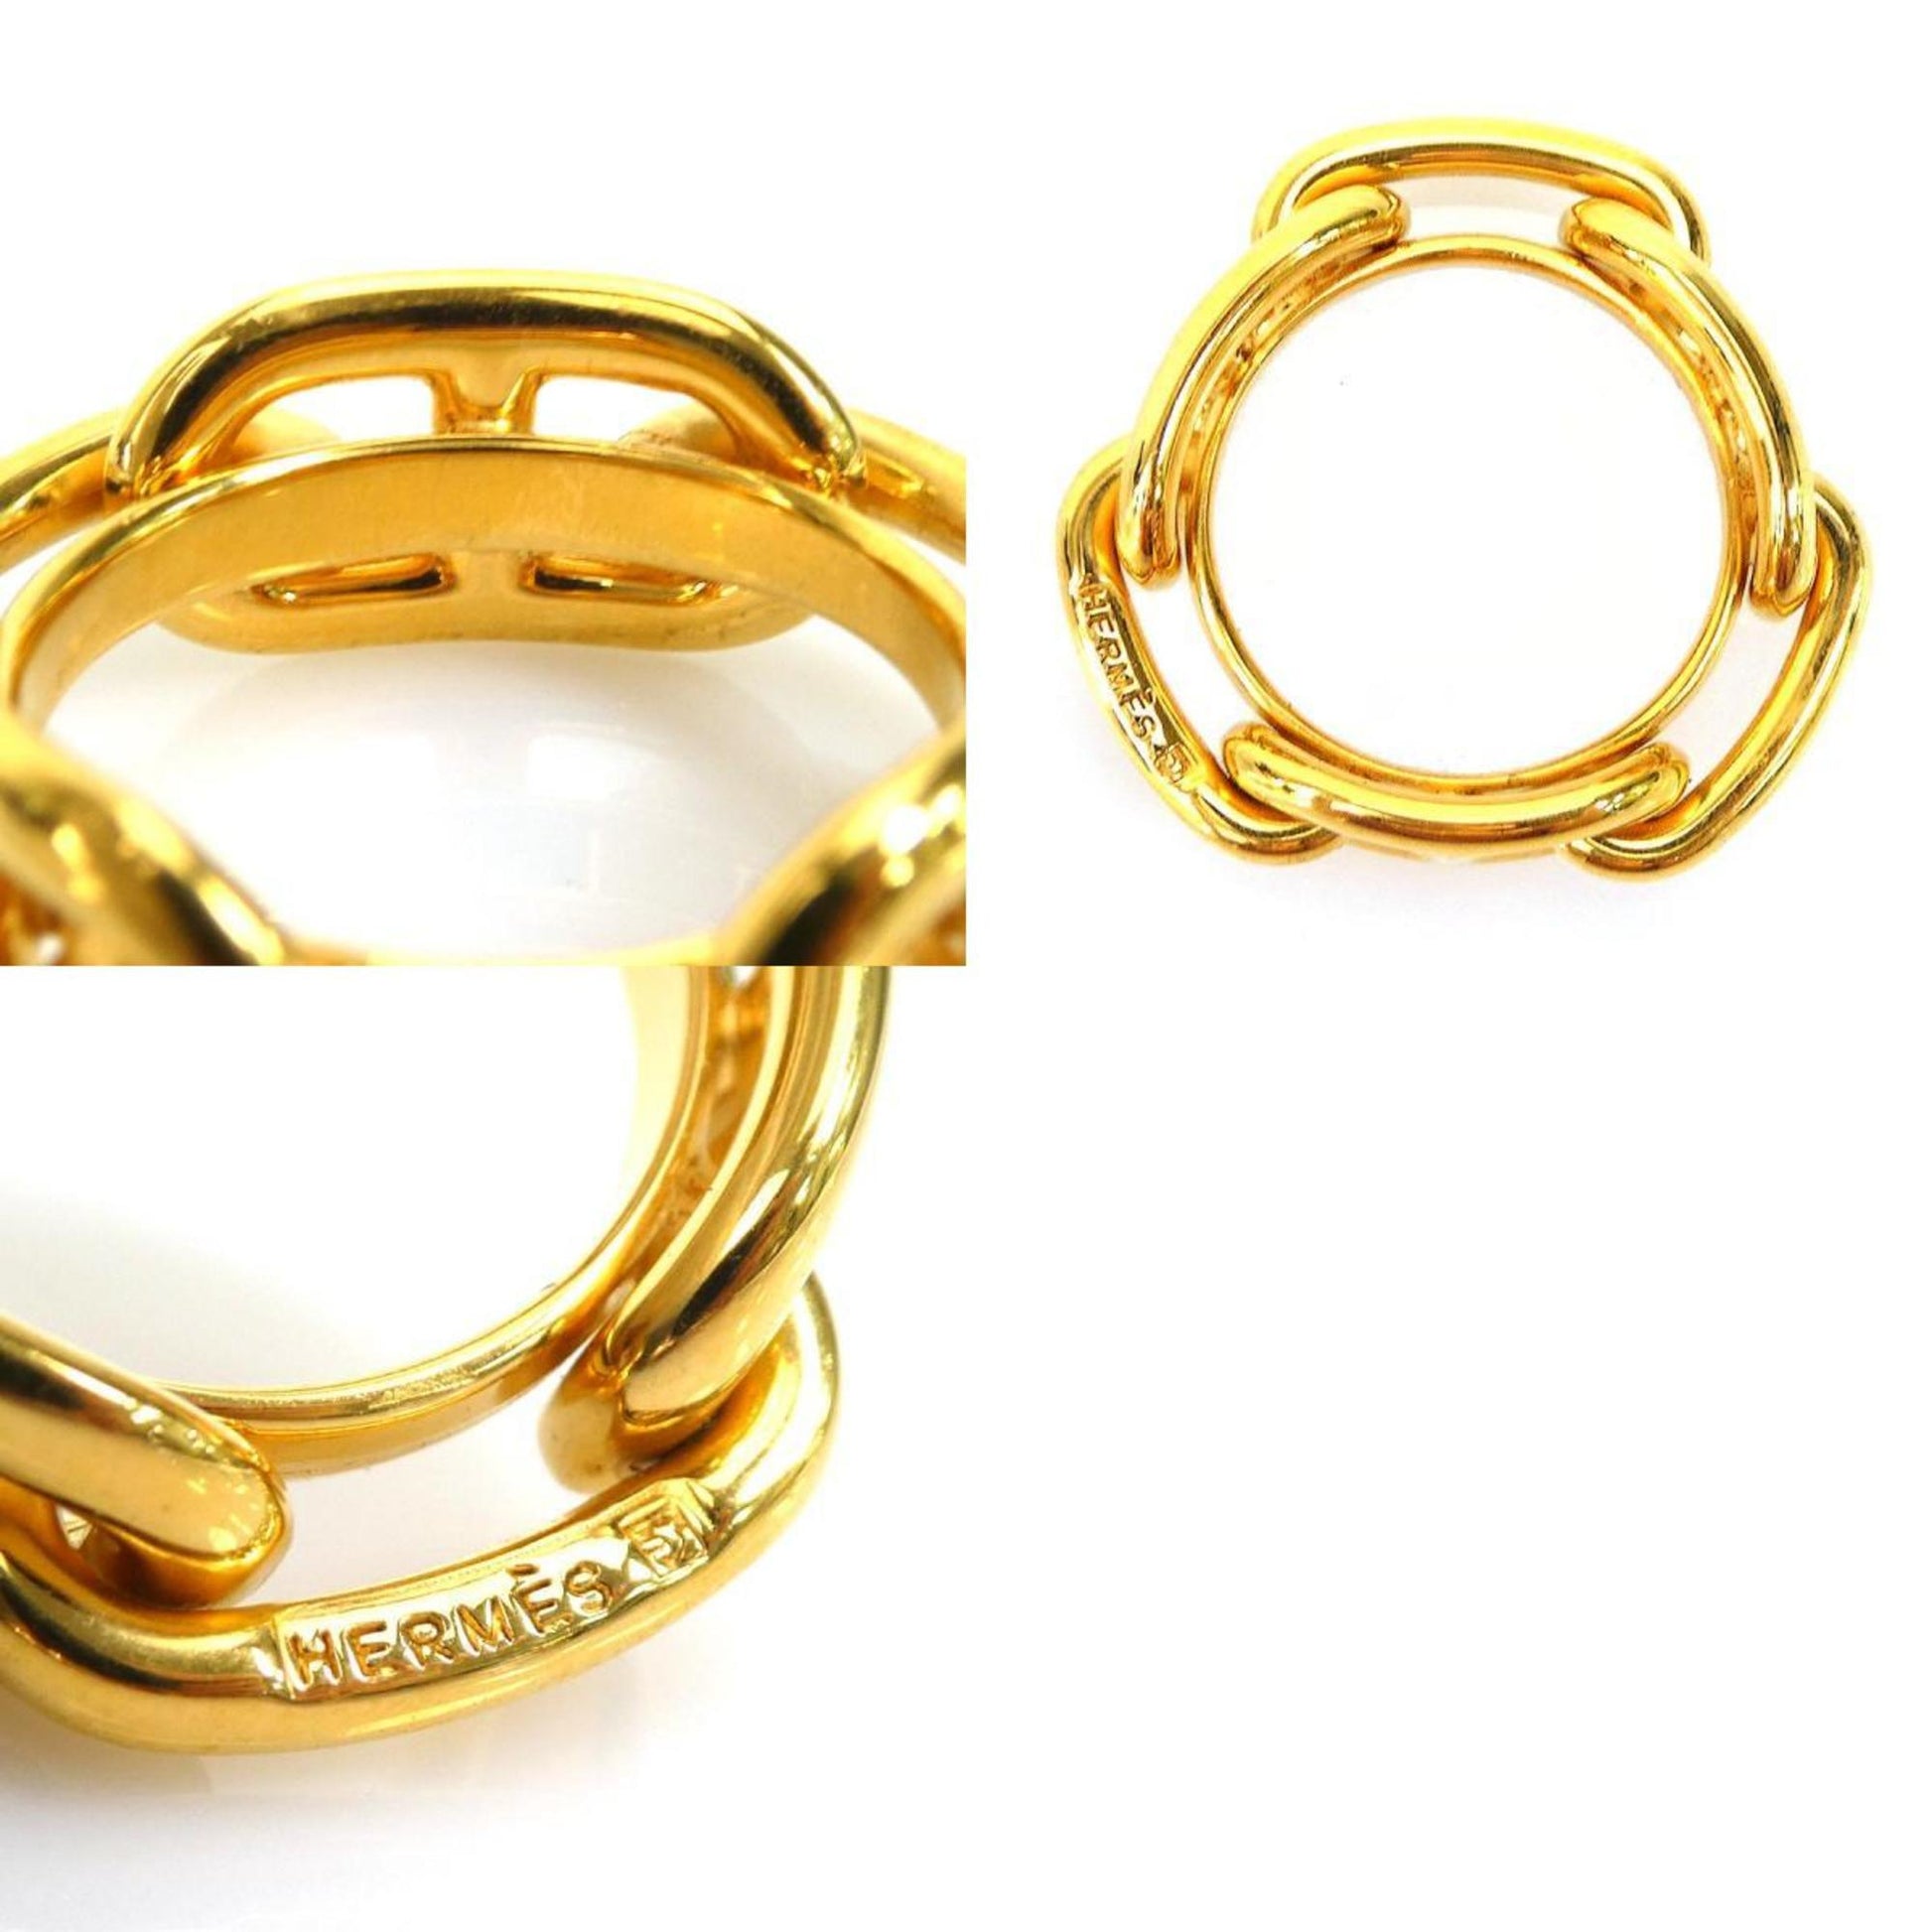 Hermes Scarf Ring Shane Dunkle Metal Gold Women's